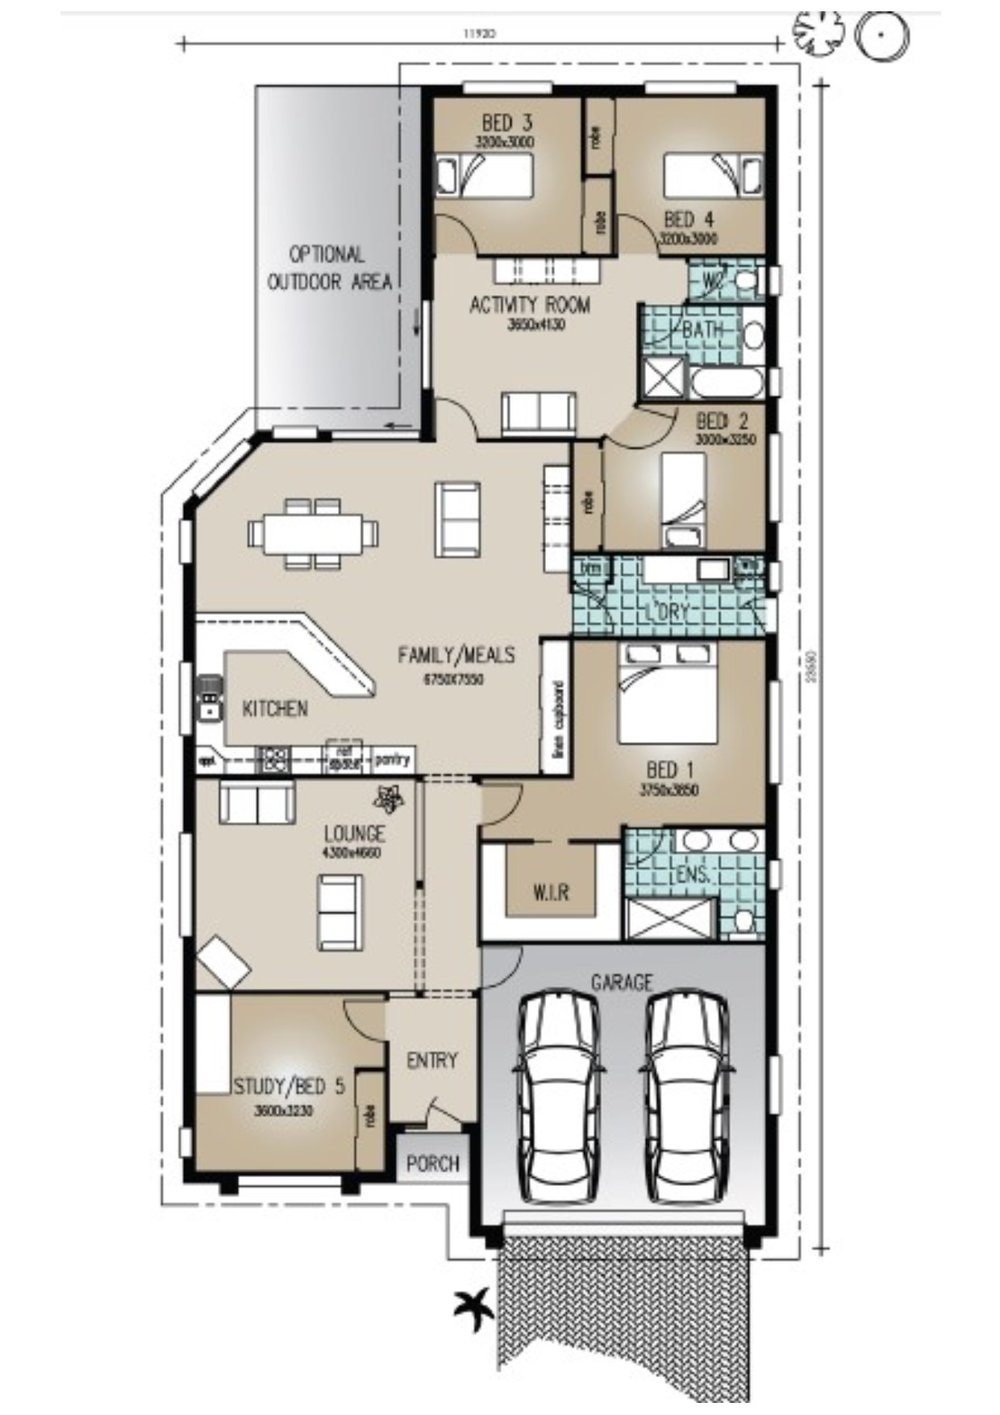 5 Bedroom Home Plans Richard Adams Homes